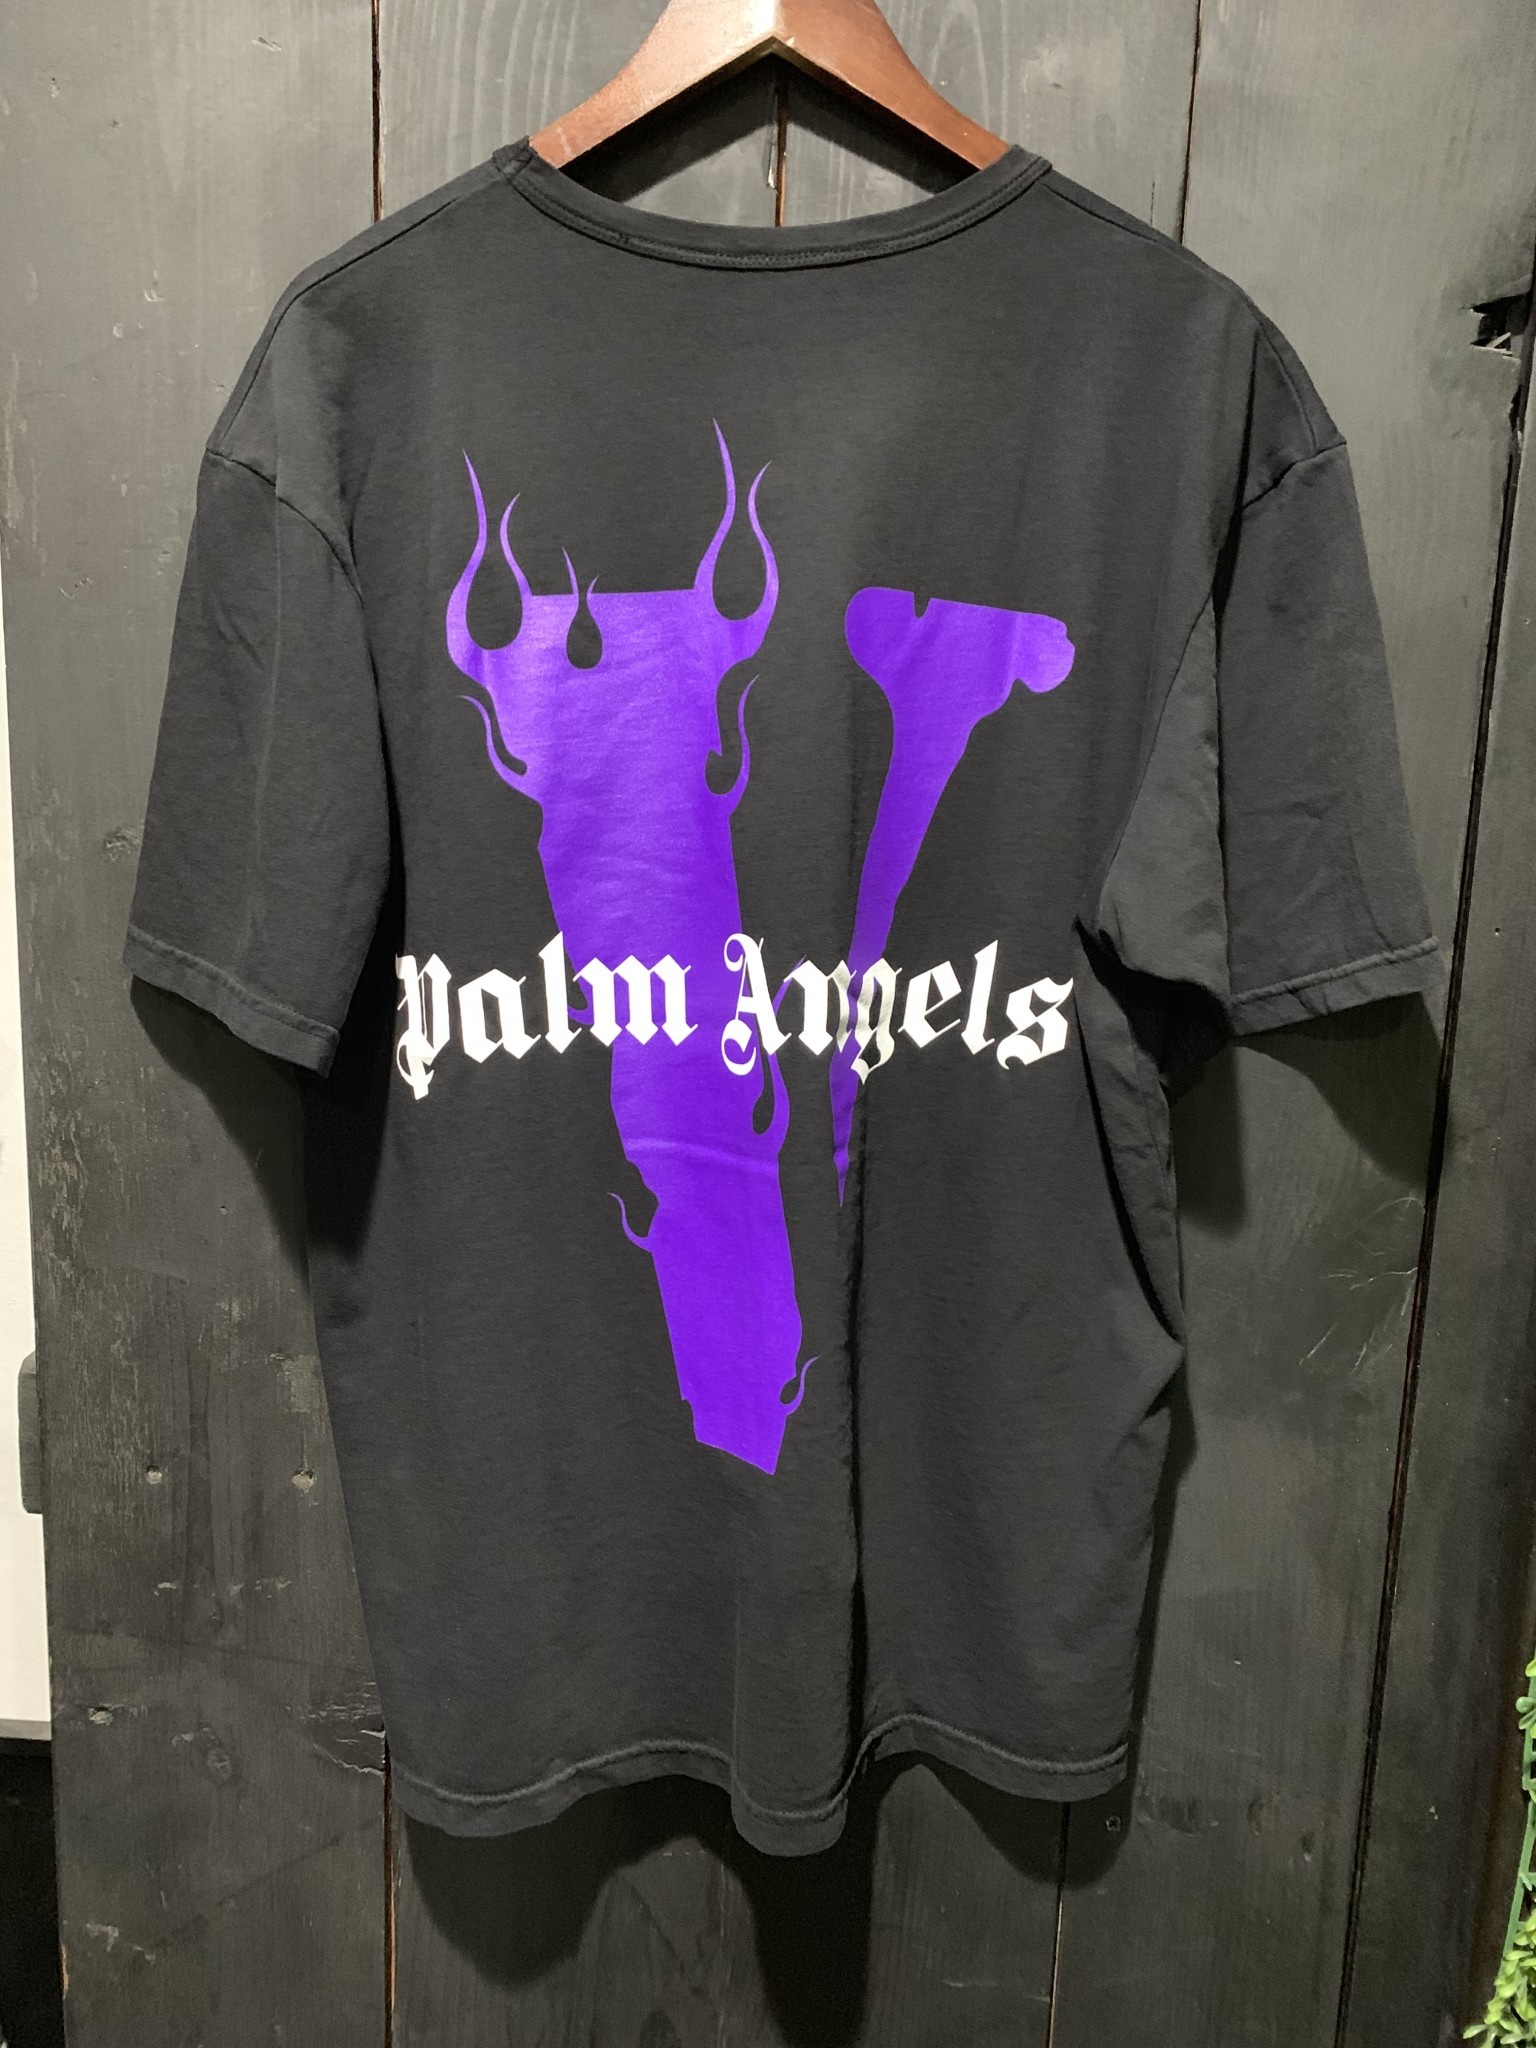 palm angels vlone t shirt